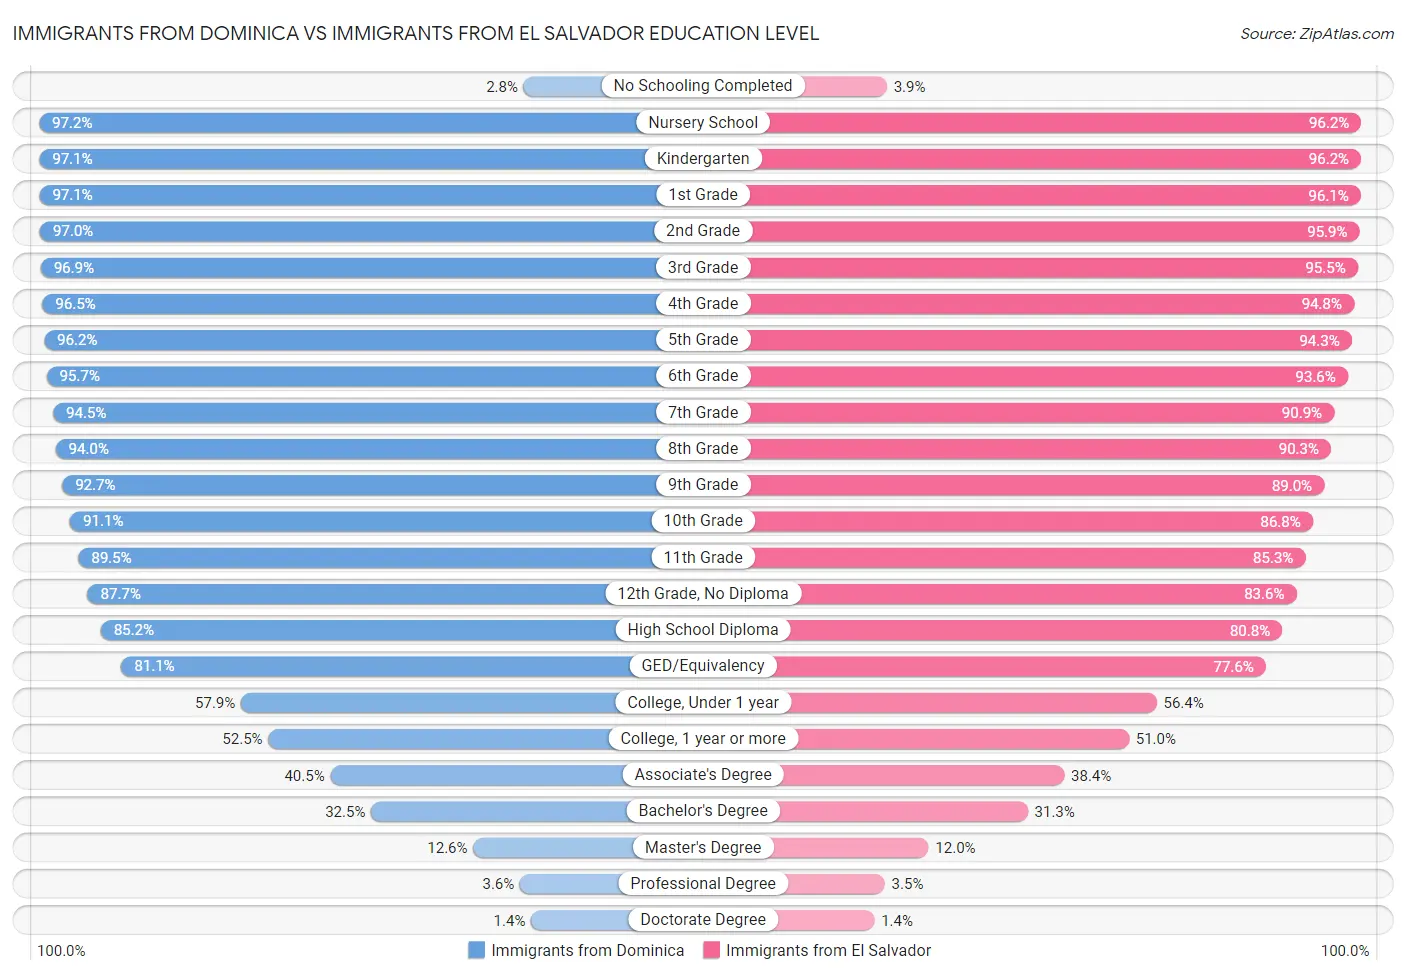 Immigrants from Dominica vs Immigrants from El Salvador Education Level